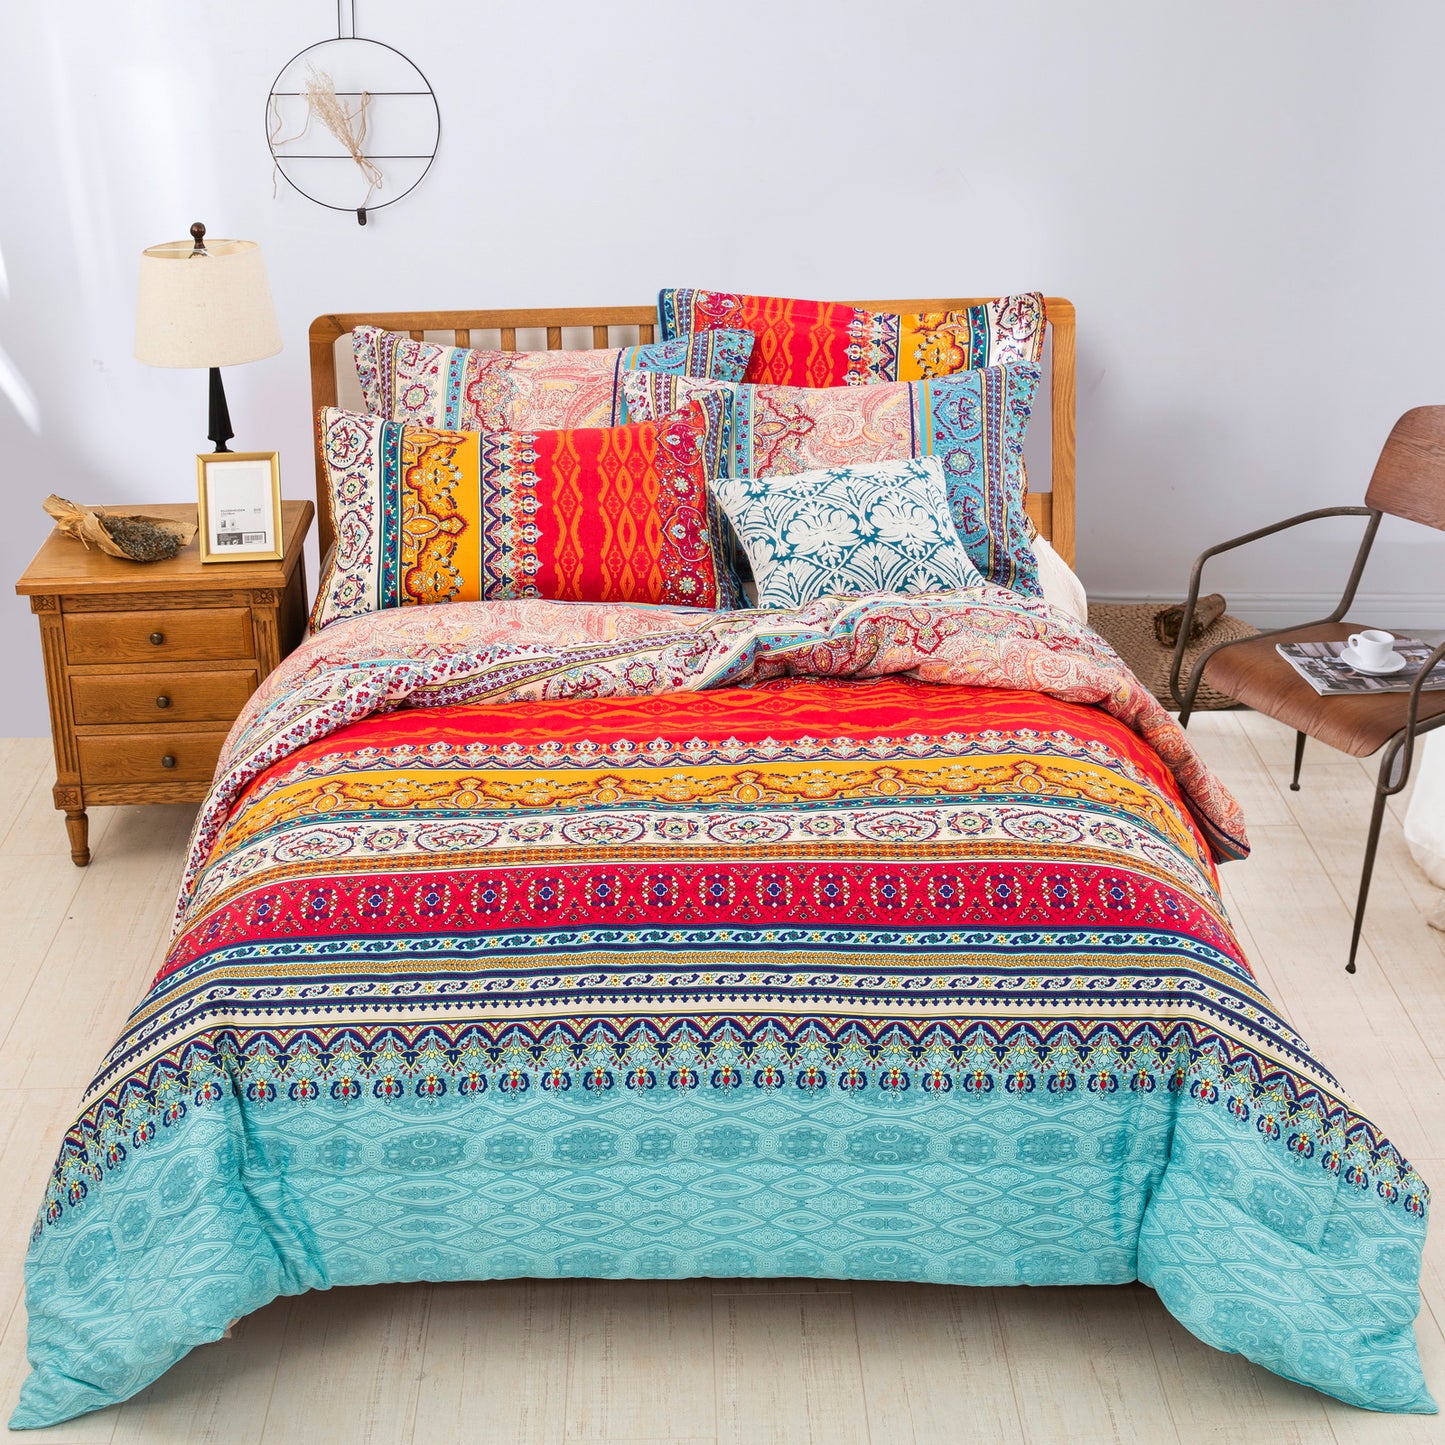 WONGS BEDDING Bohemian Western Pattern Comforter Set with 2 Pillow Shams